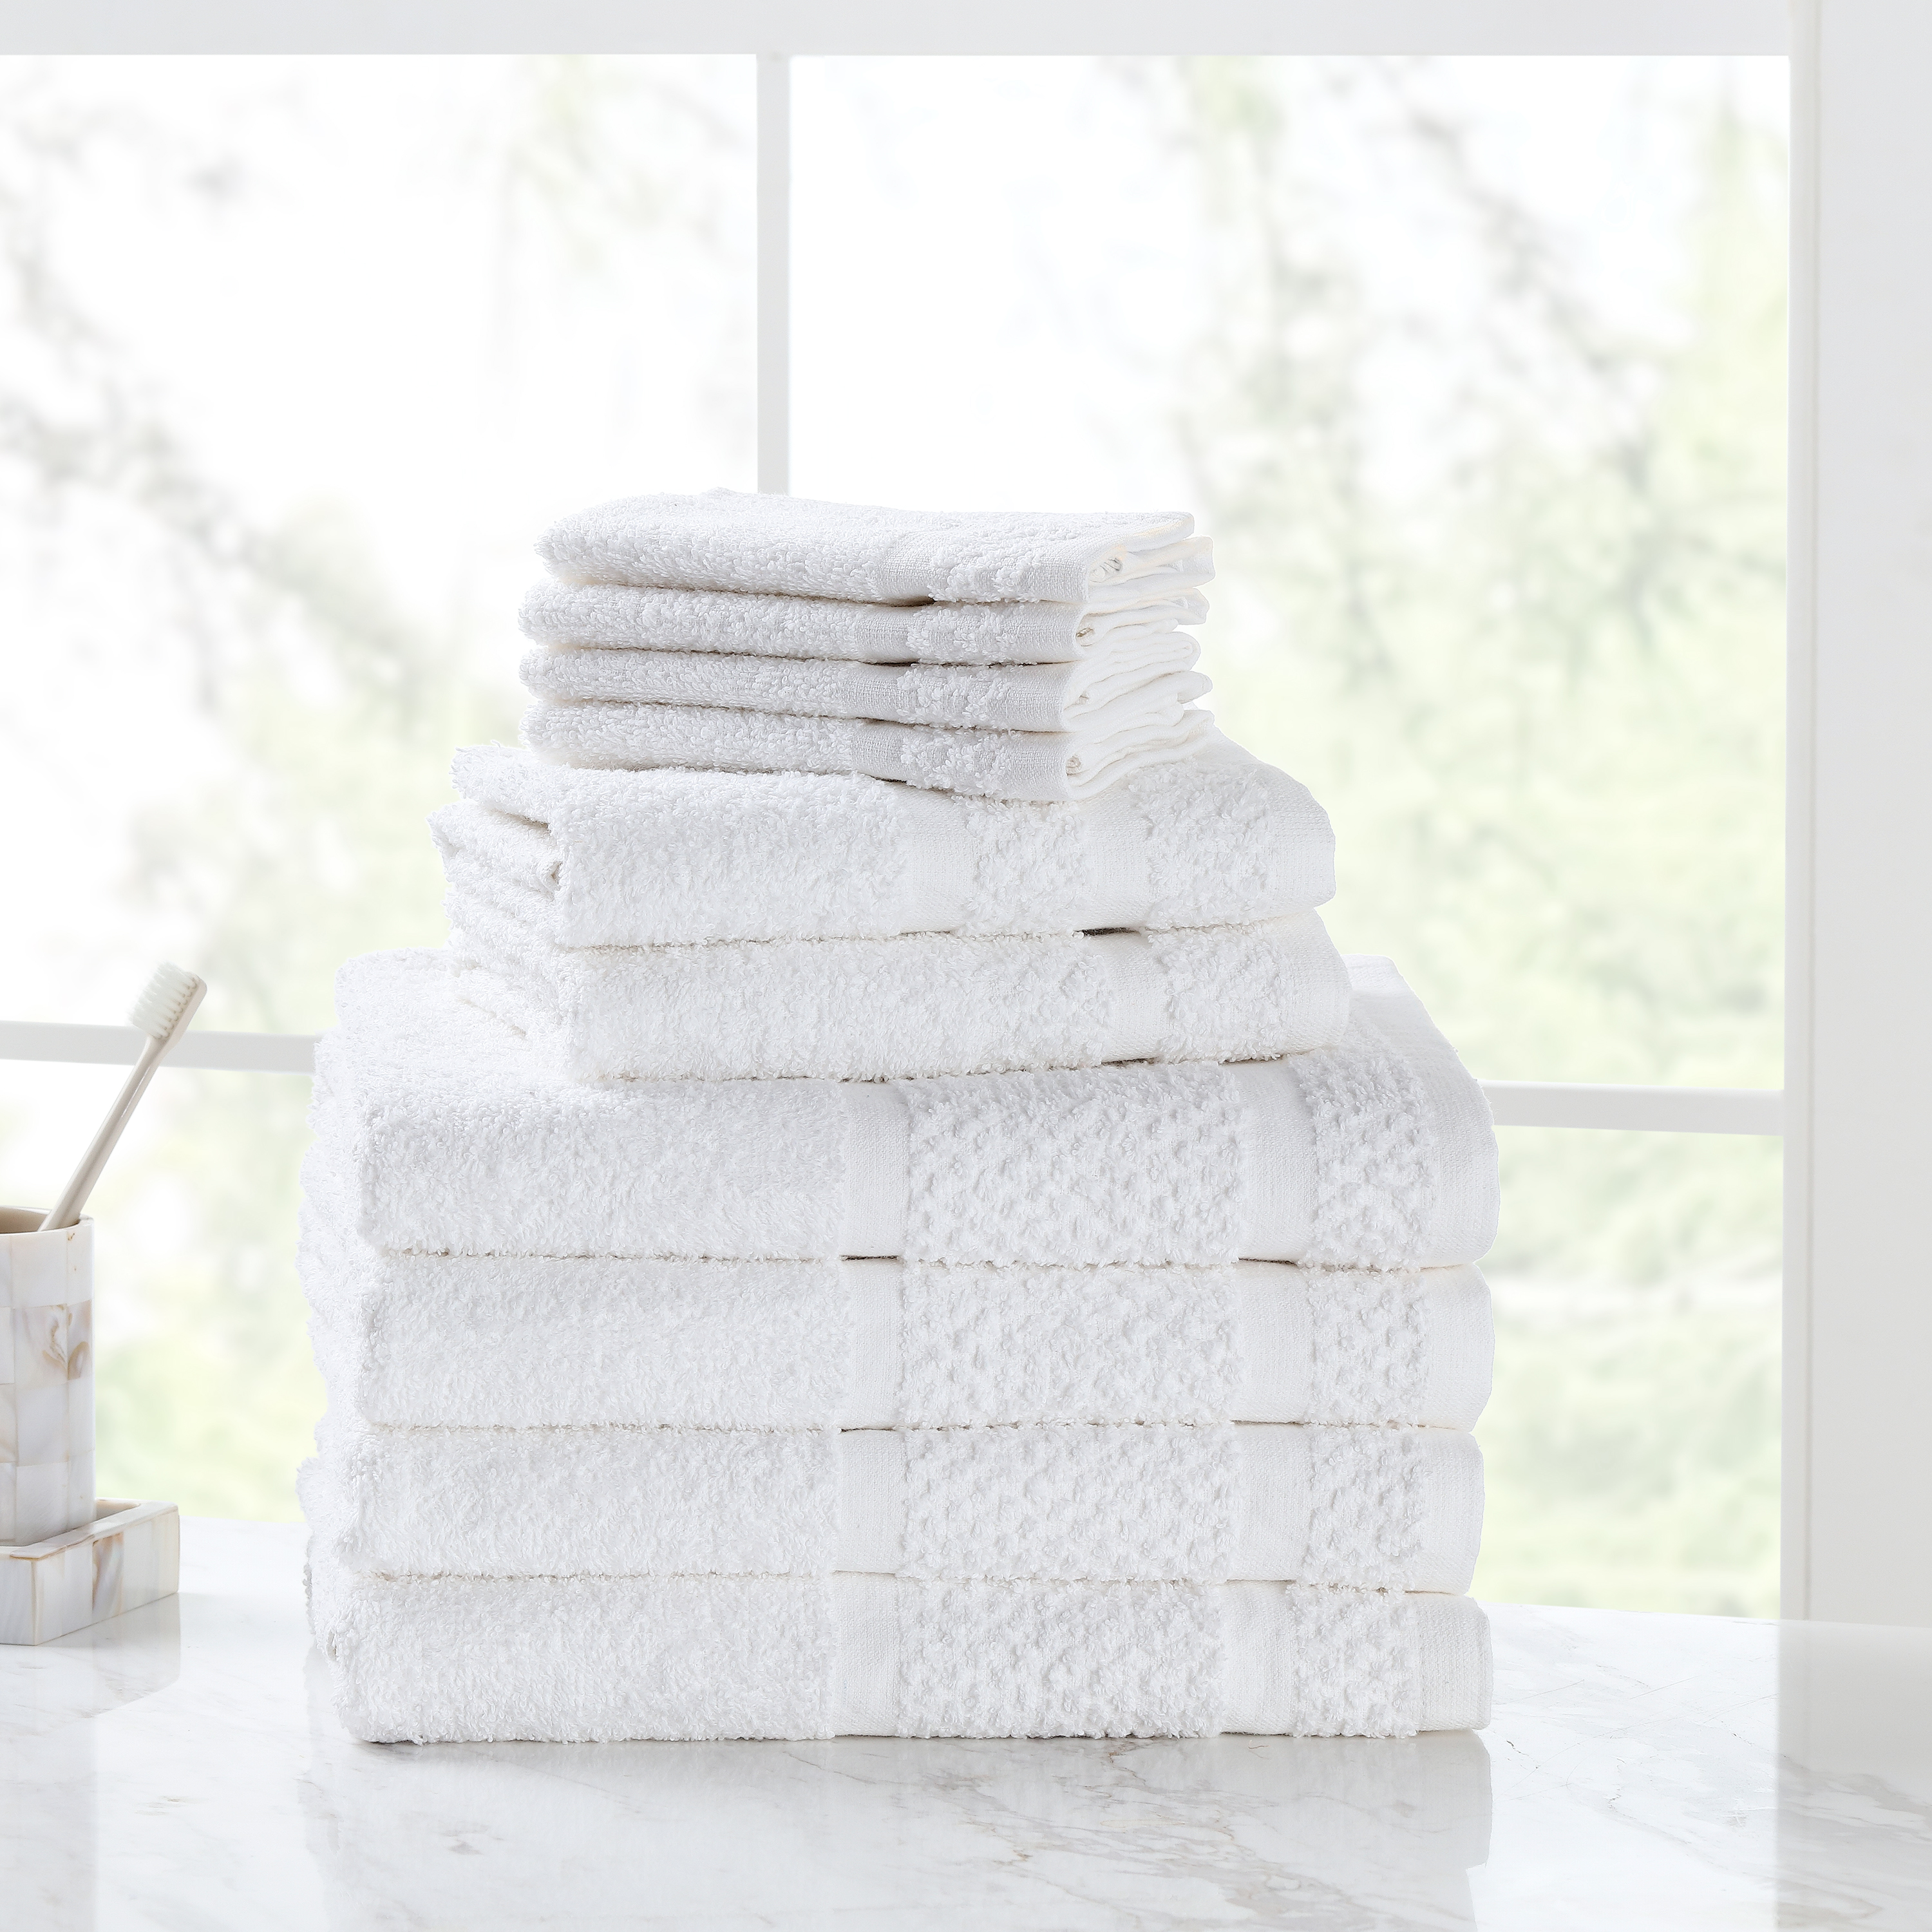 Mainstays 10 Piece Bath Towel Set with Upgraded Softness & Durability, White - image 1 of 5